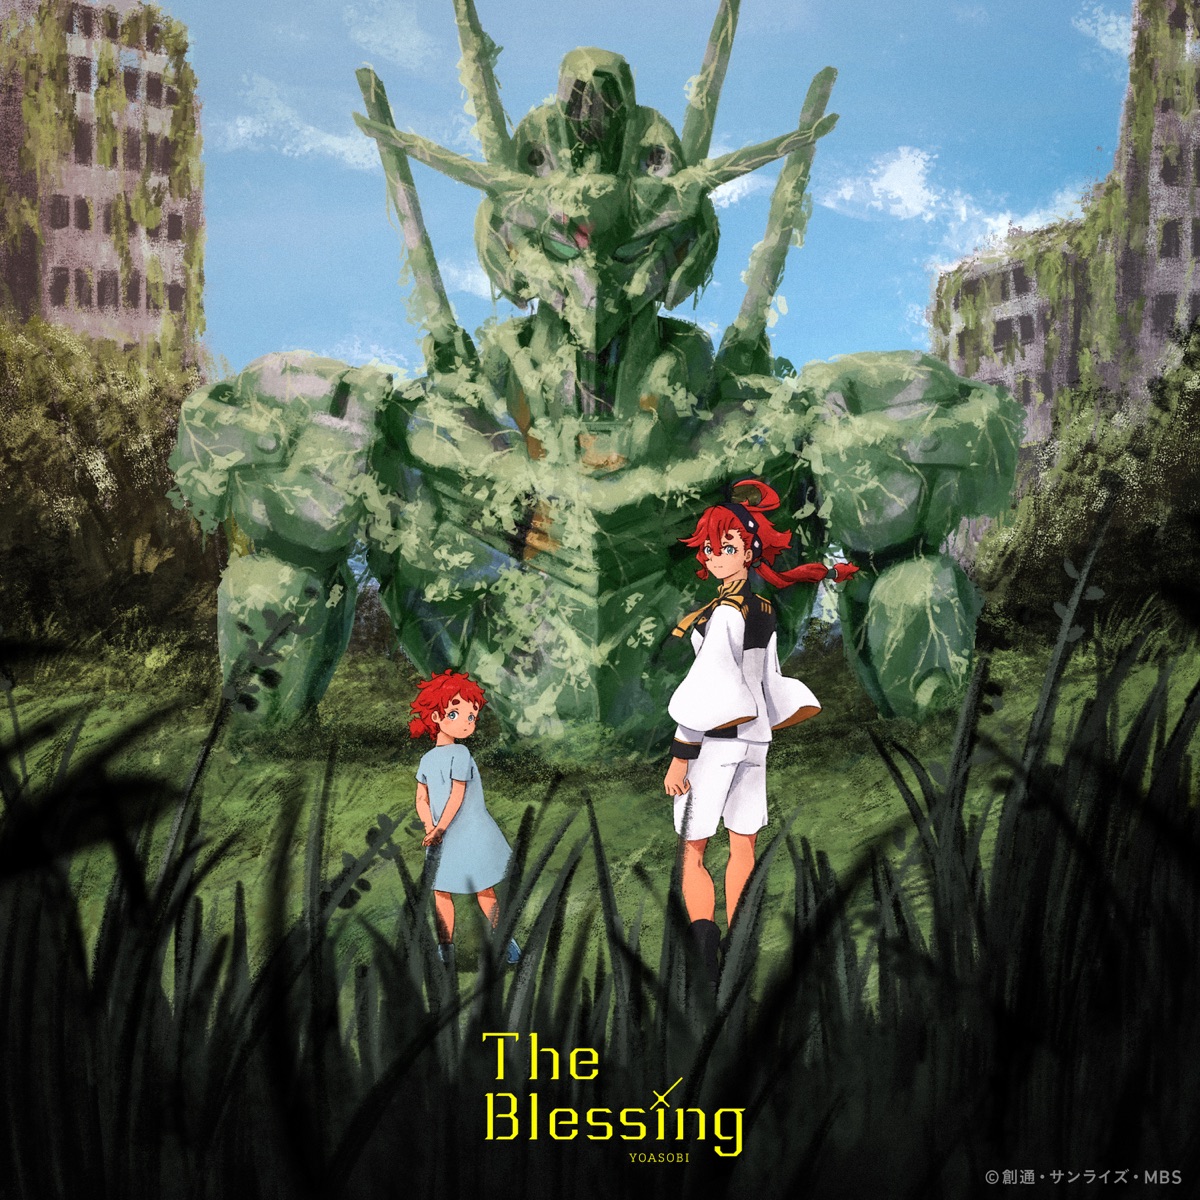 YOASOBI - The Blessing